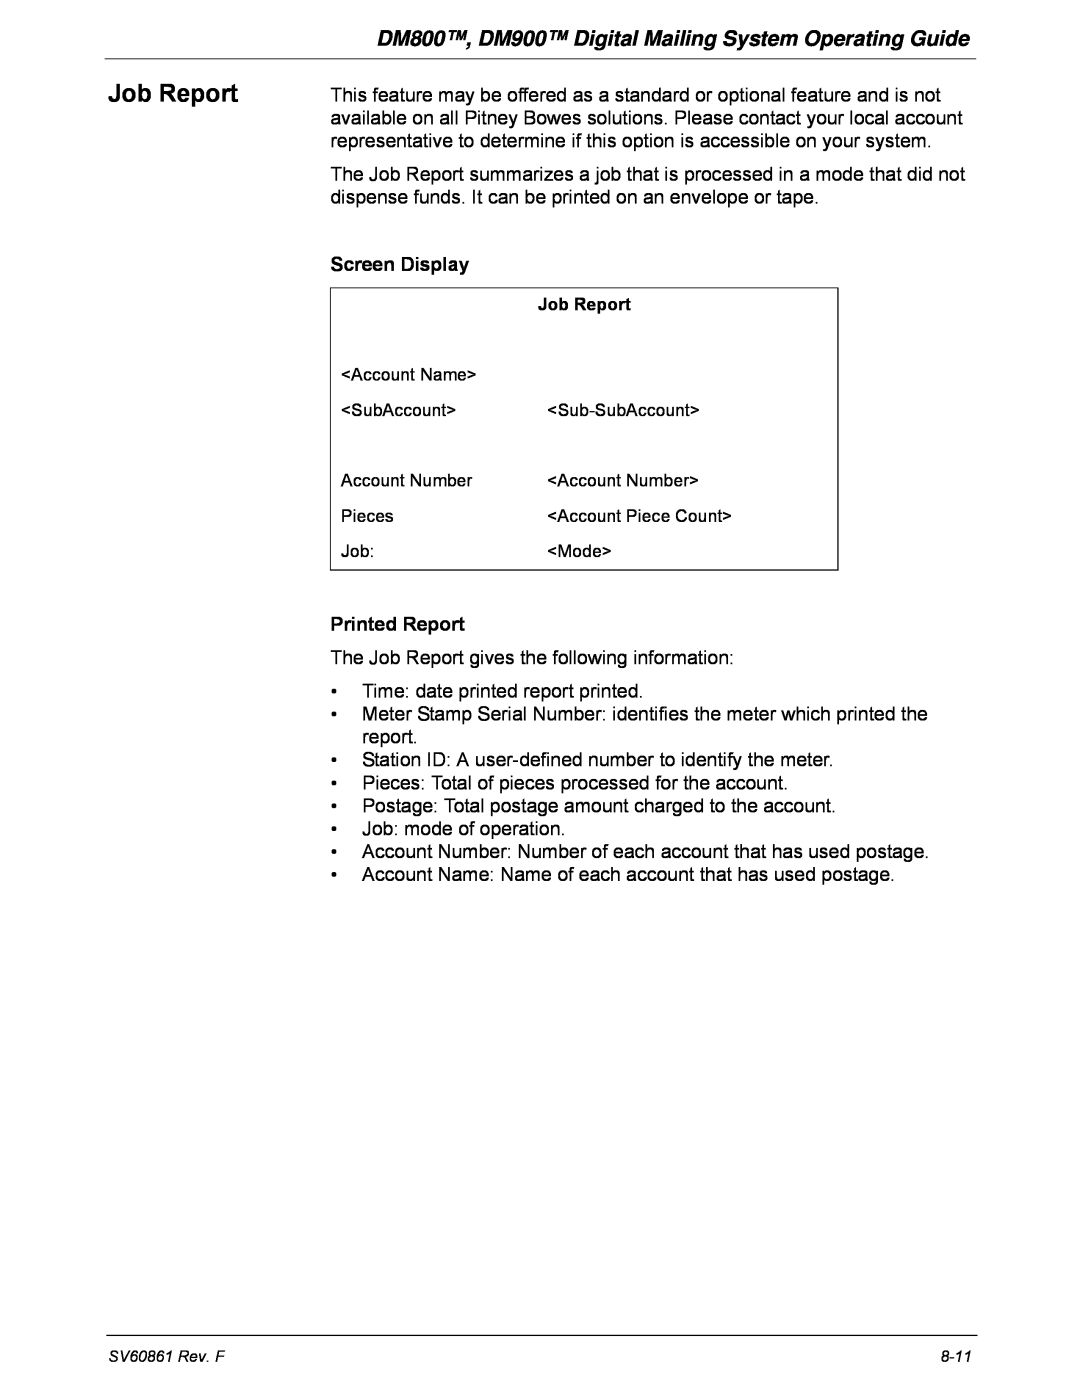 Pitney Bowes manual Job Report, DM800, DM900 Digital Mailing System Operating Guide, Screen Display, Printed Report 